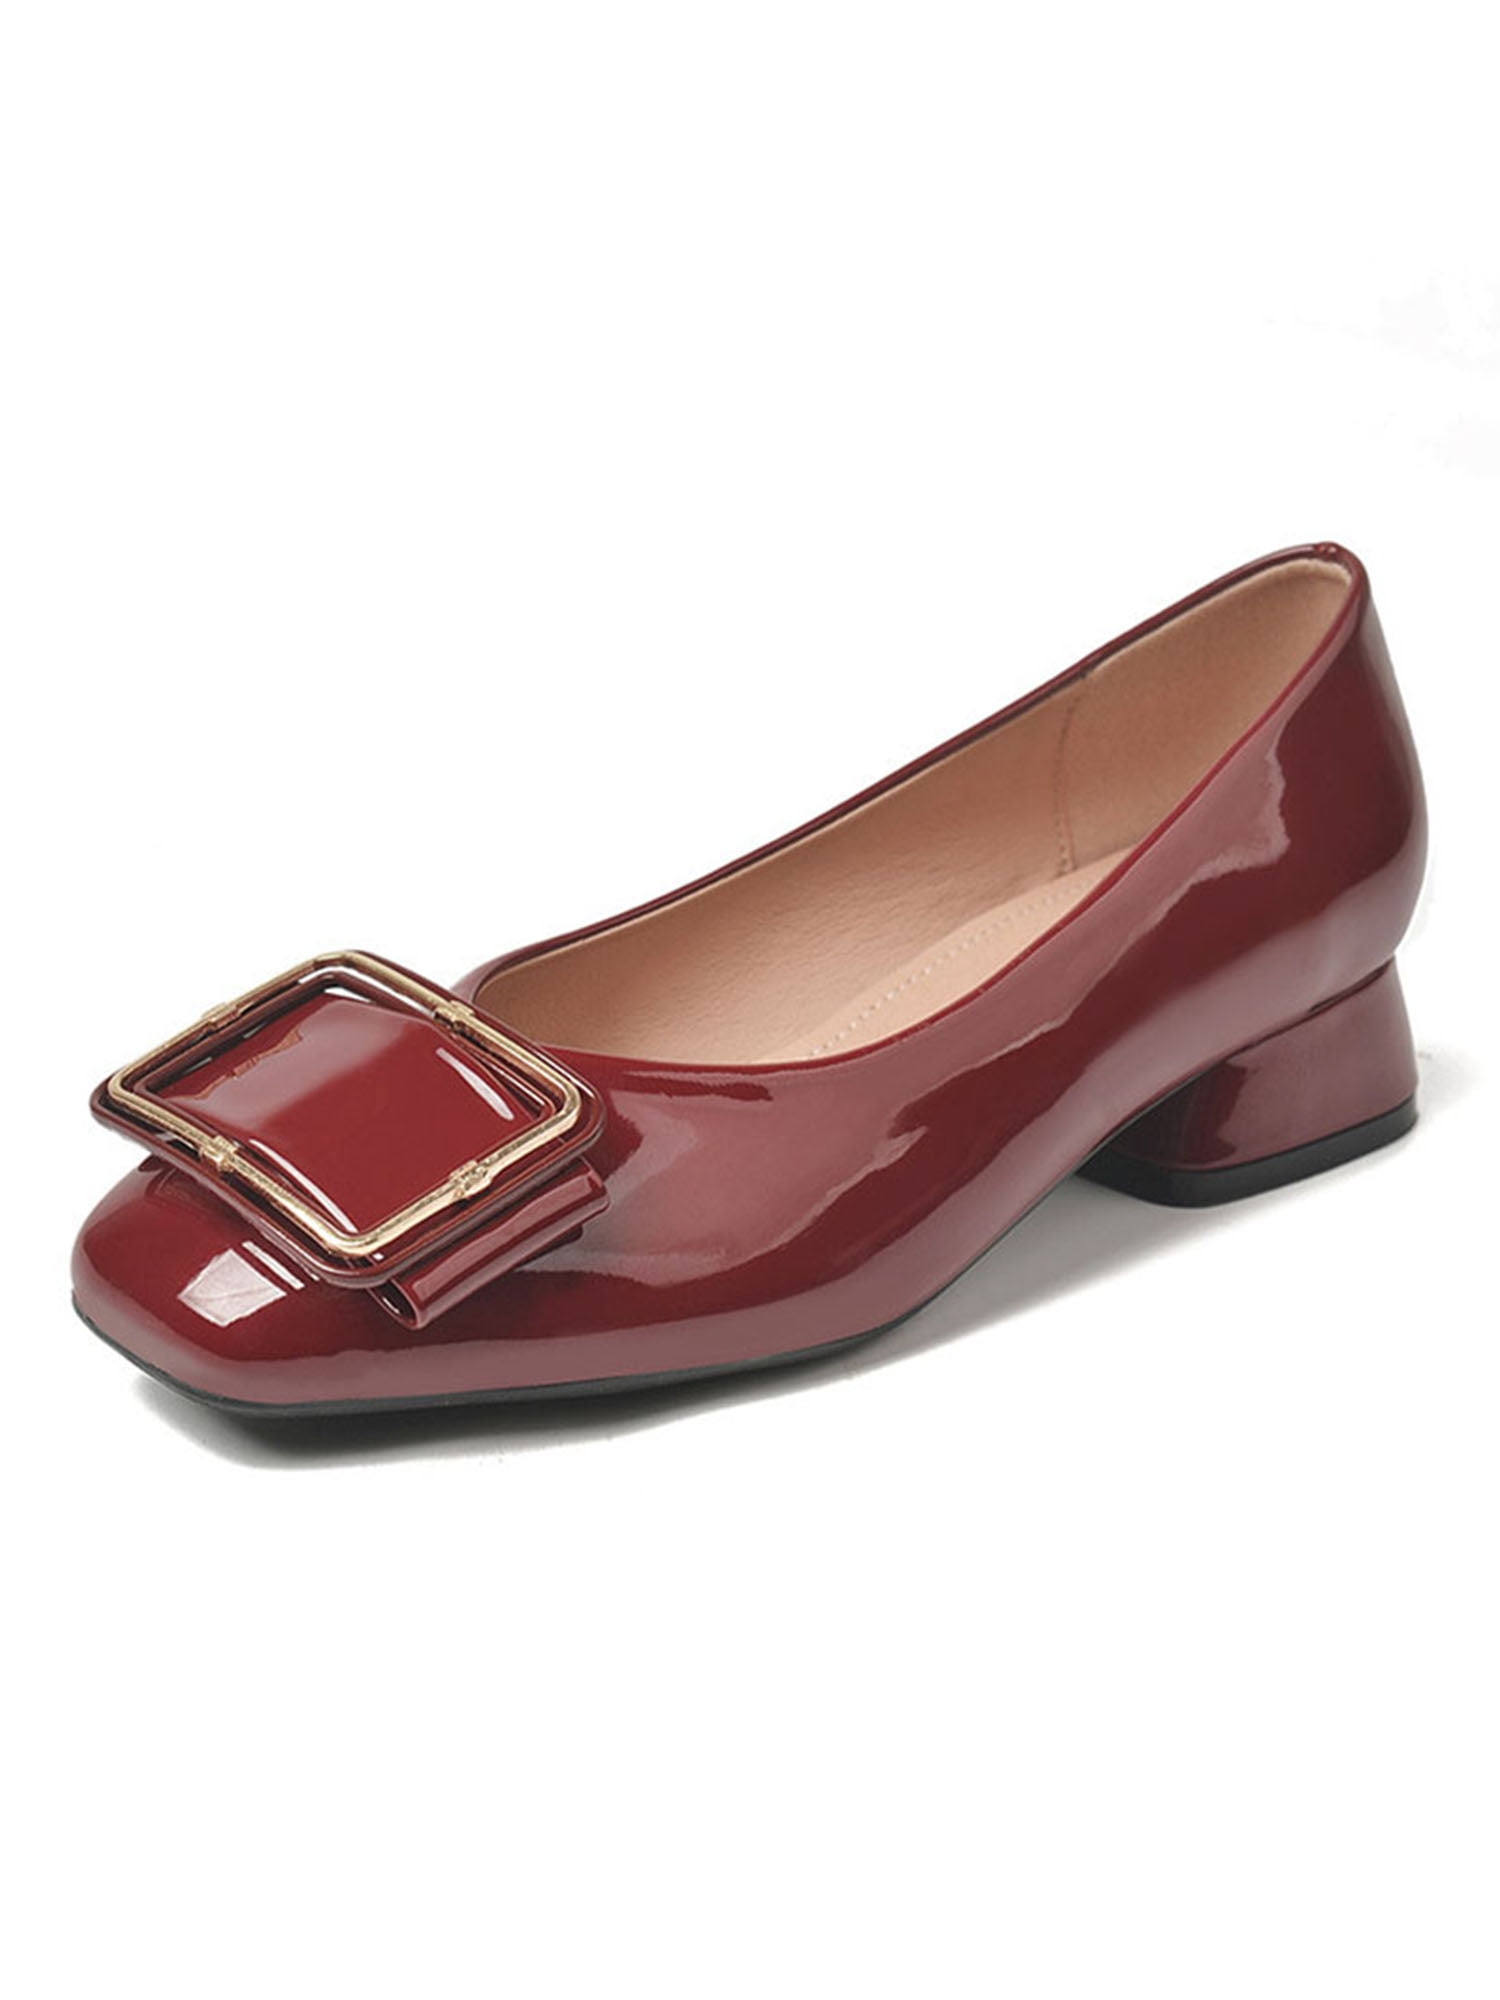 Ladies Wine Red Chunky Heels | Red Shoes Big Heels | Red Big Shoes Women - Red  Heels - Aliexpress